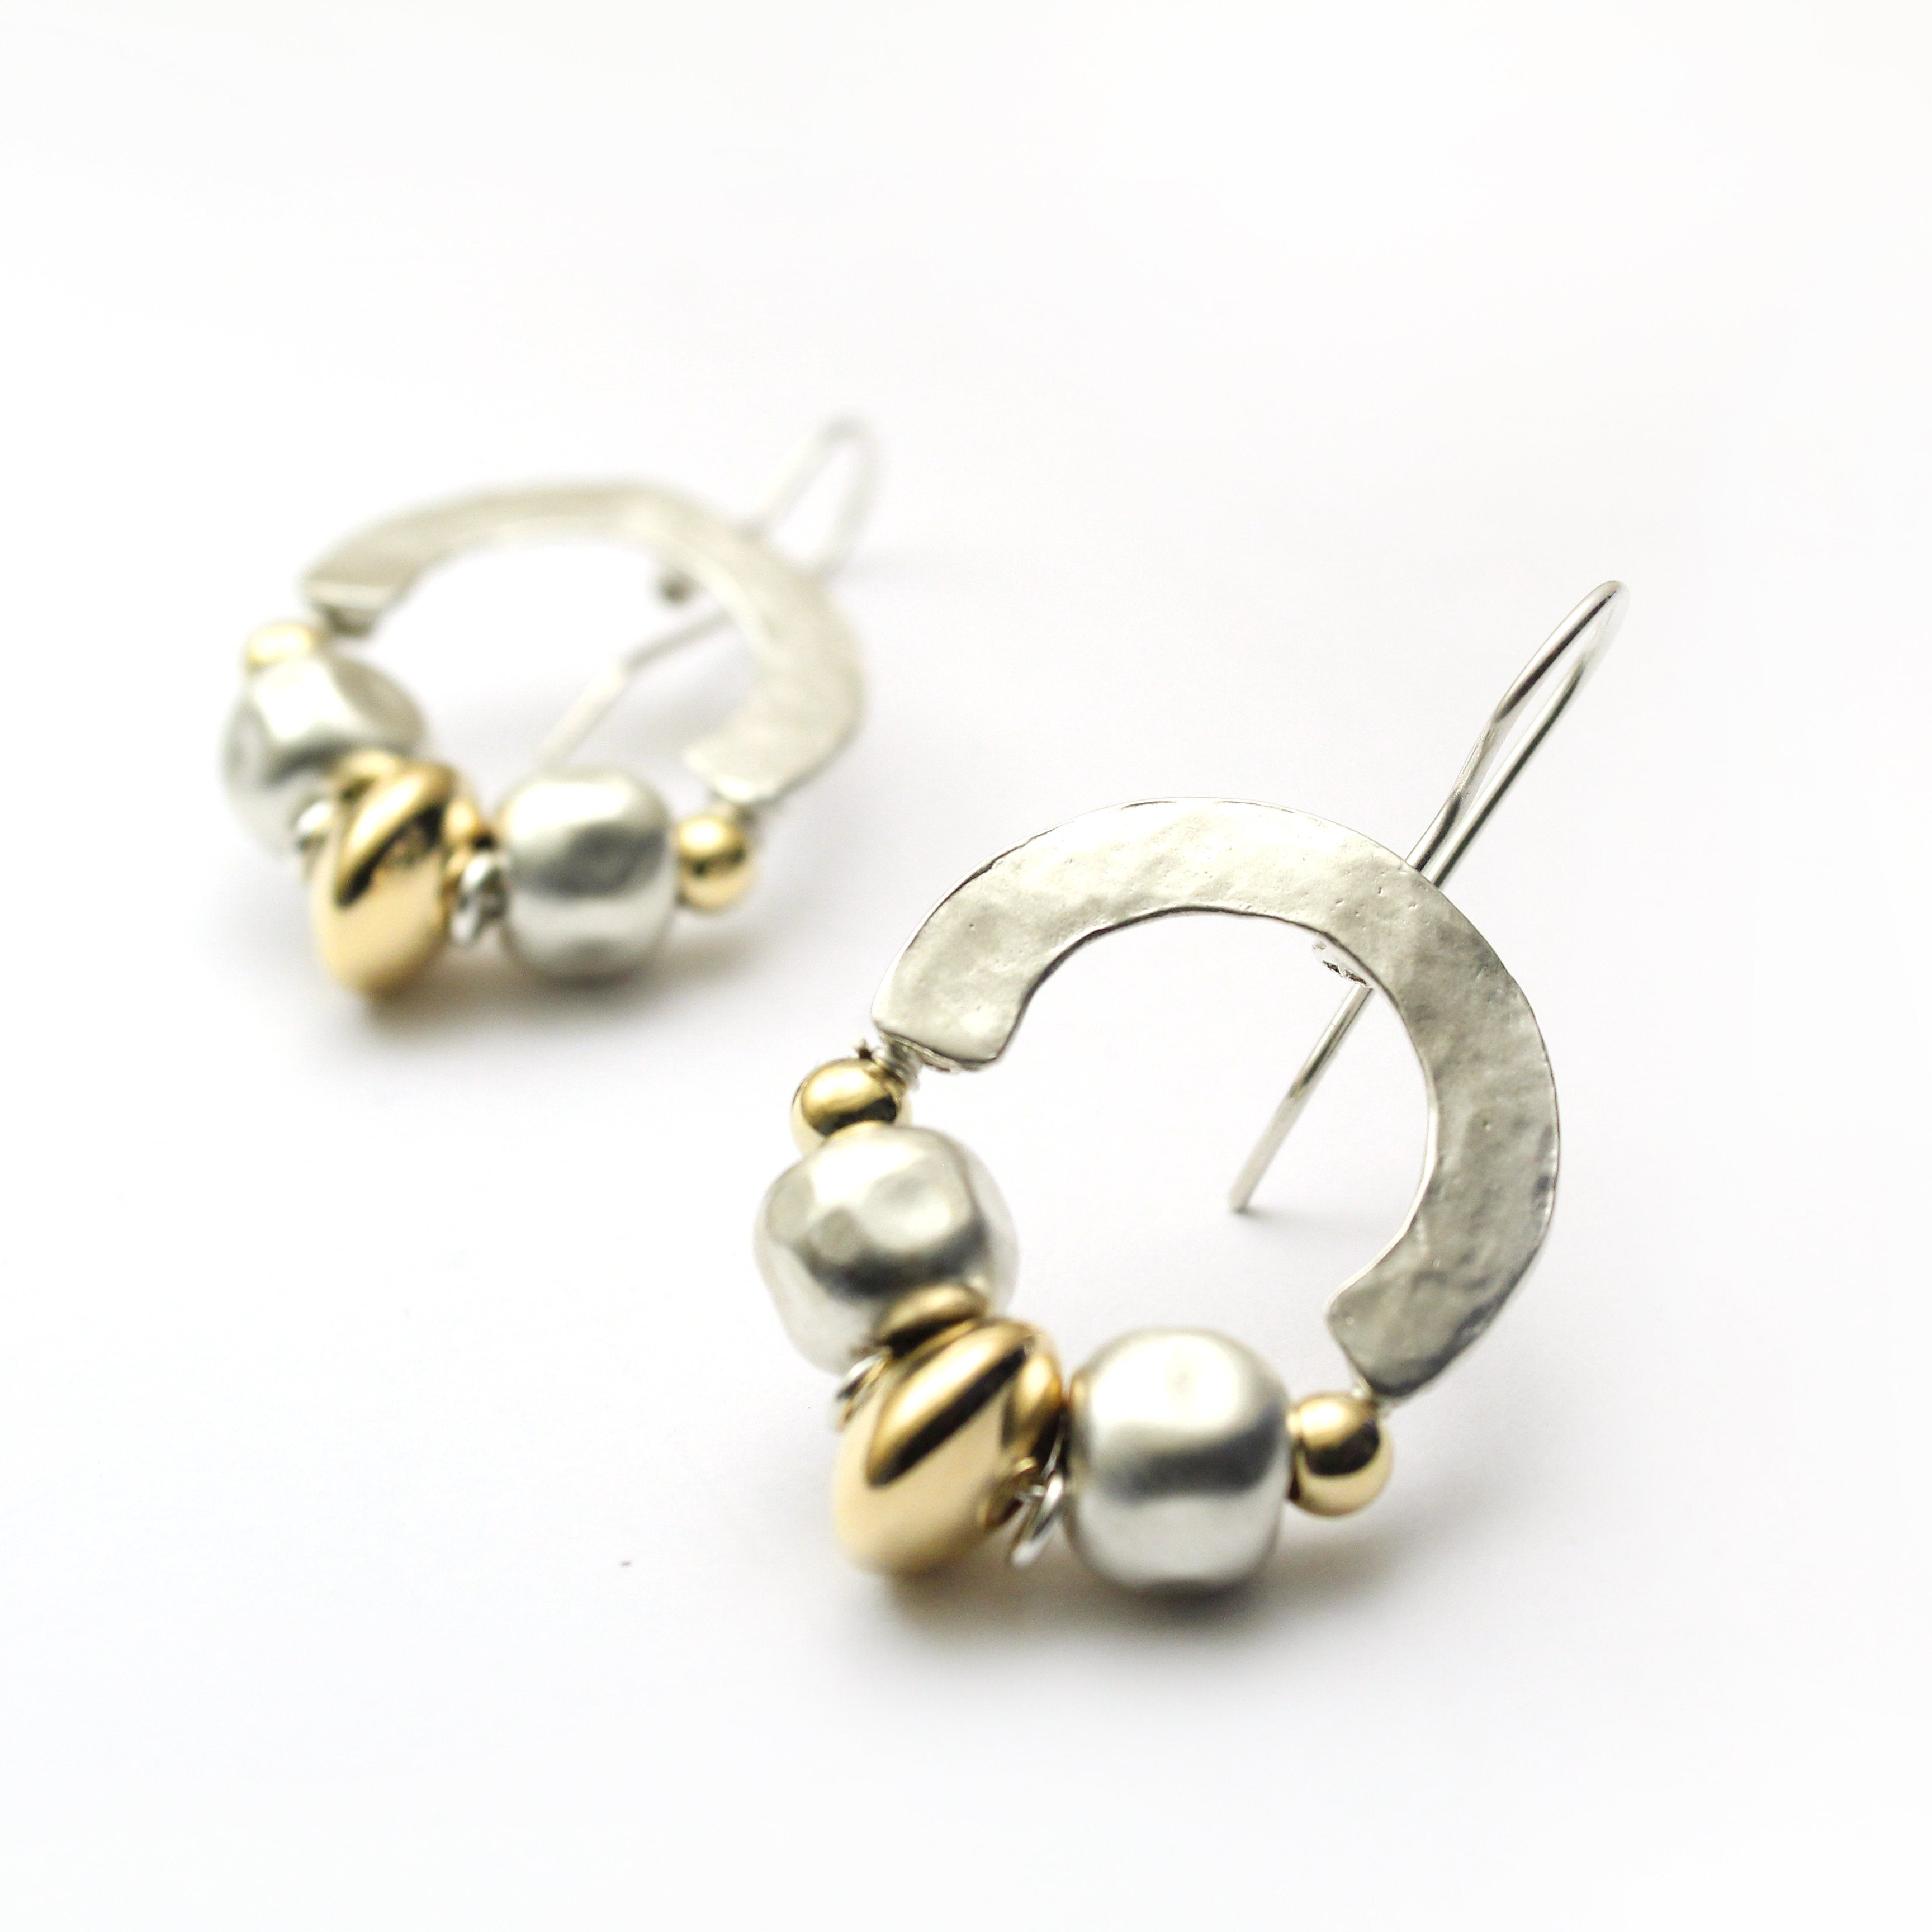 Elegant Bohemian Style Silver & Gold Filled Medium Earrings - Shulamit Kanter